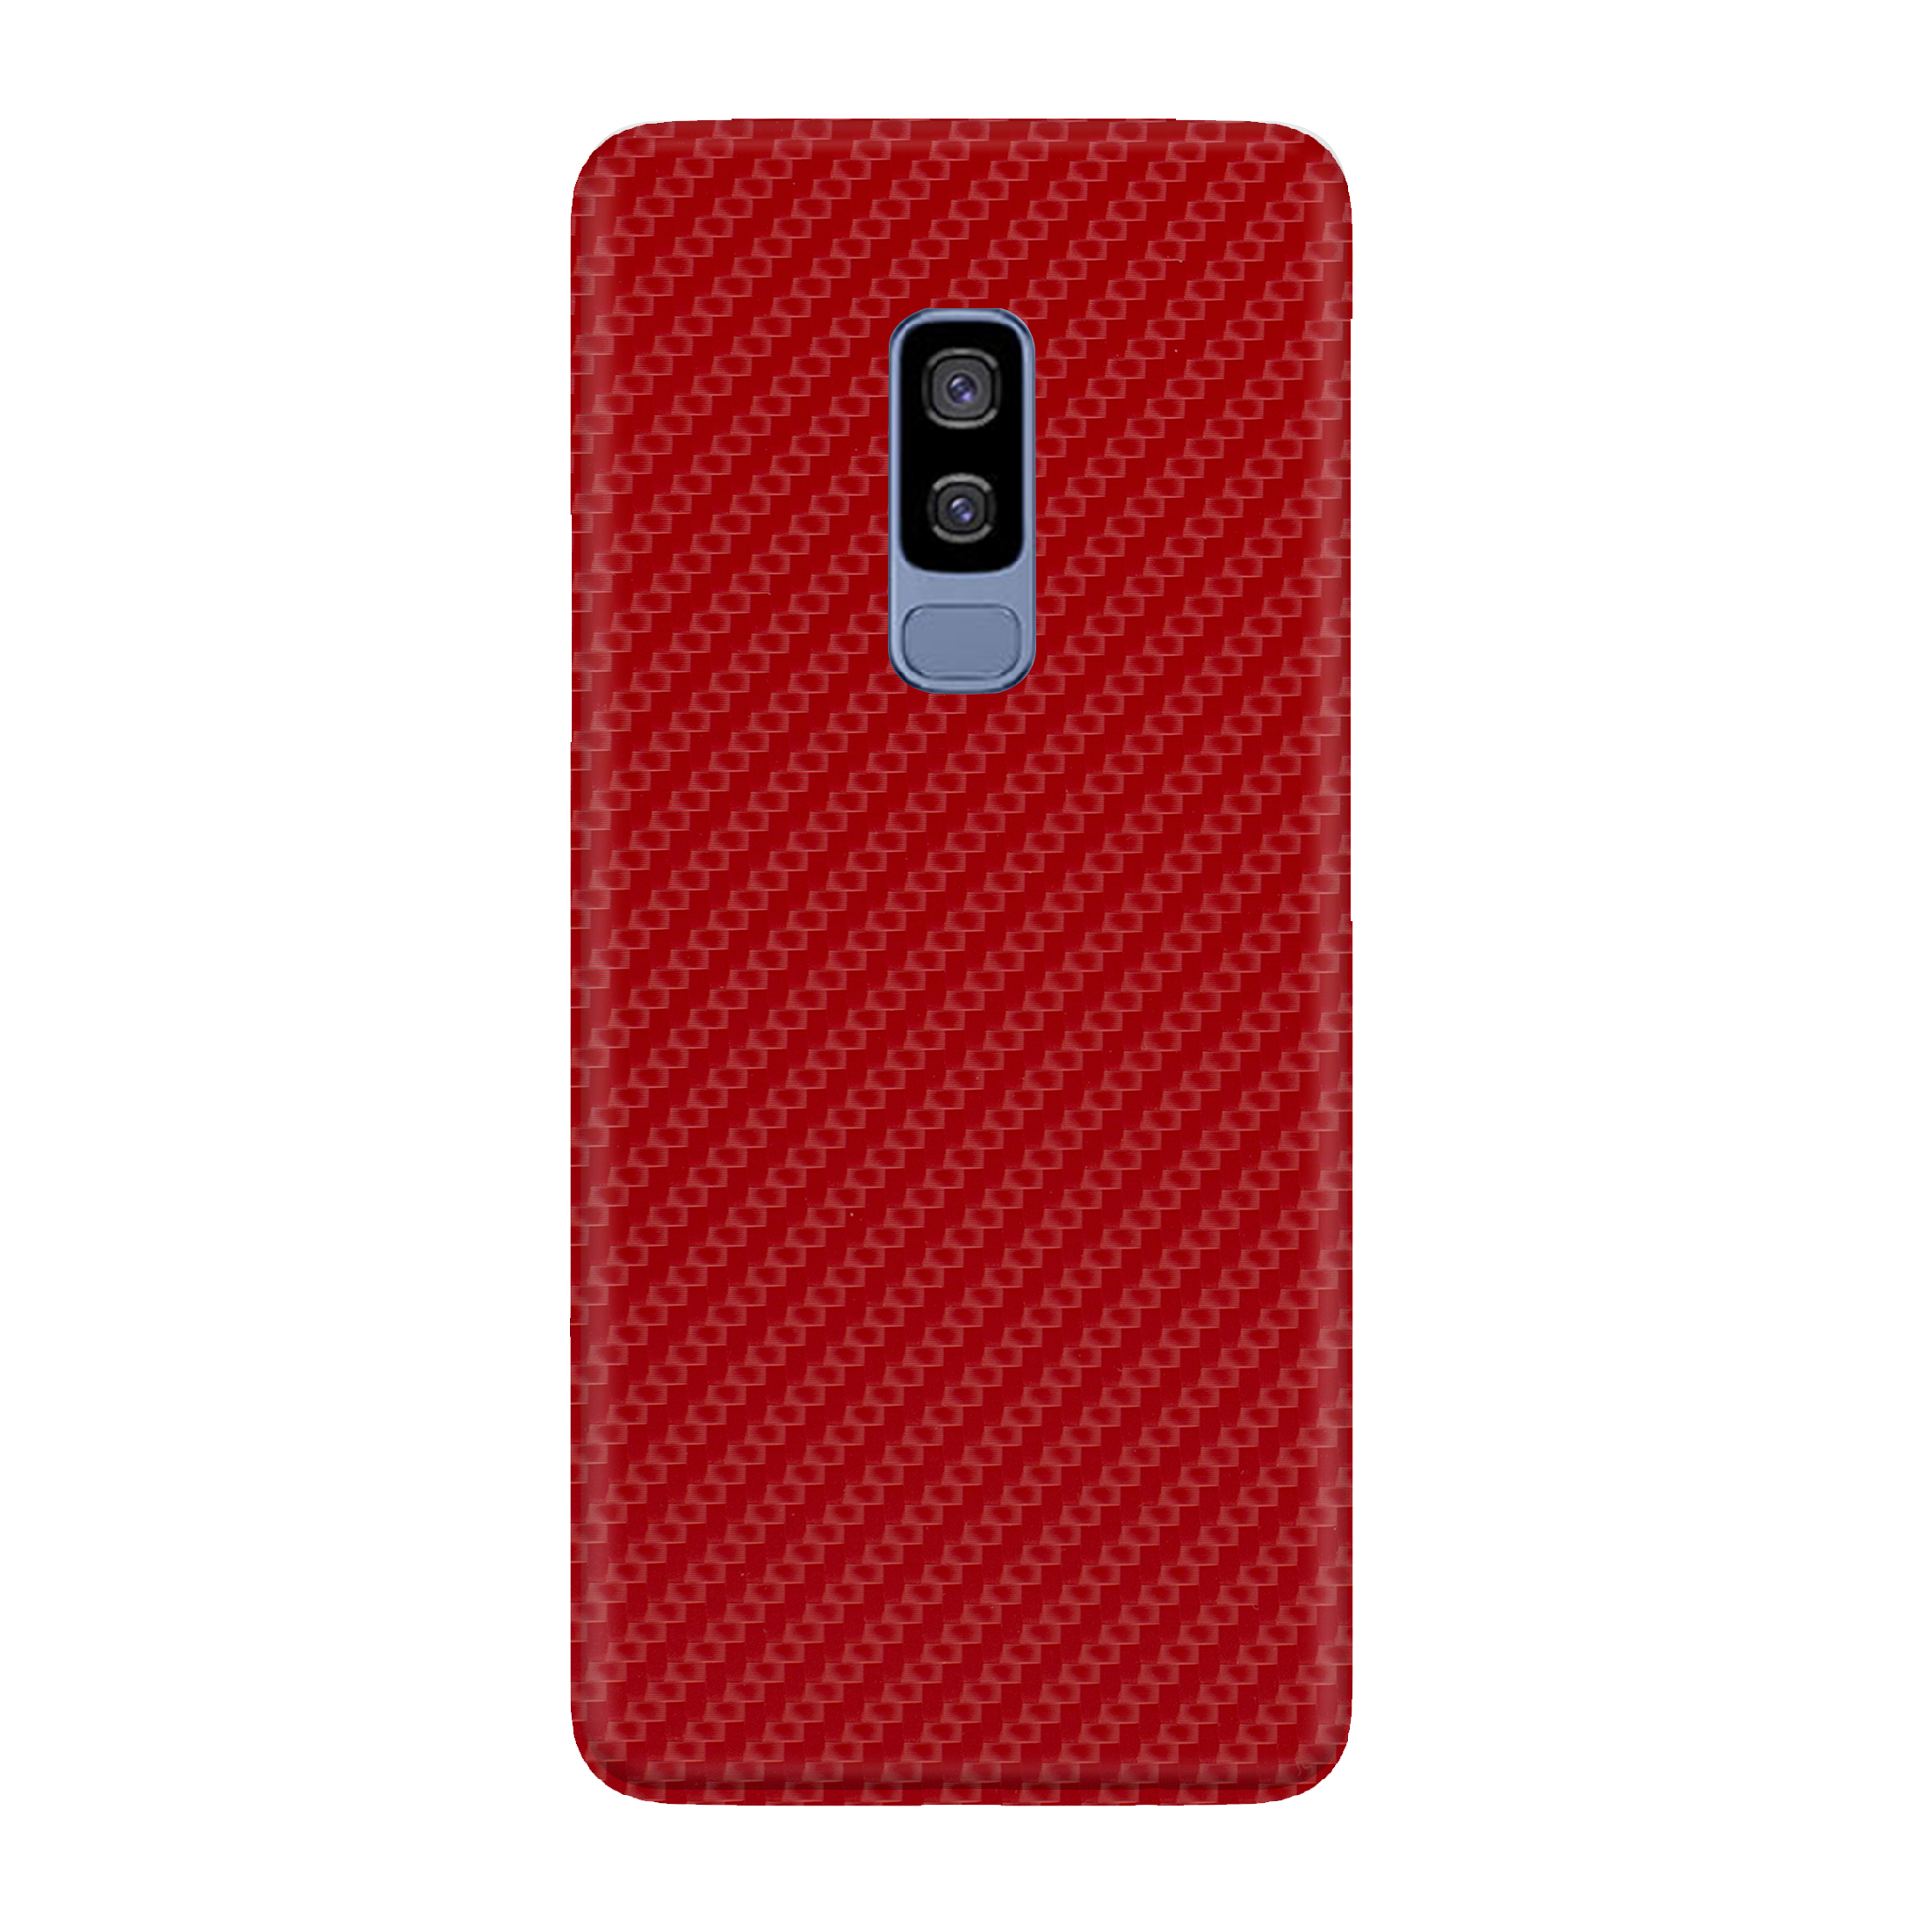 Carbon Fiber Red Skin for Samsung S9 Plus